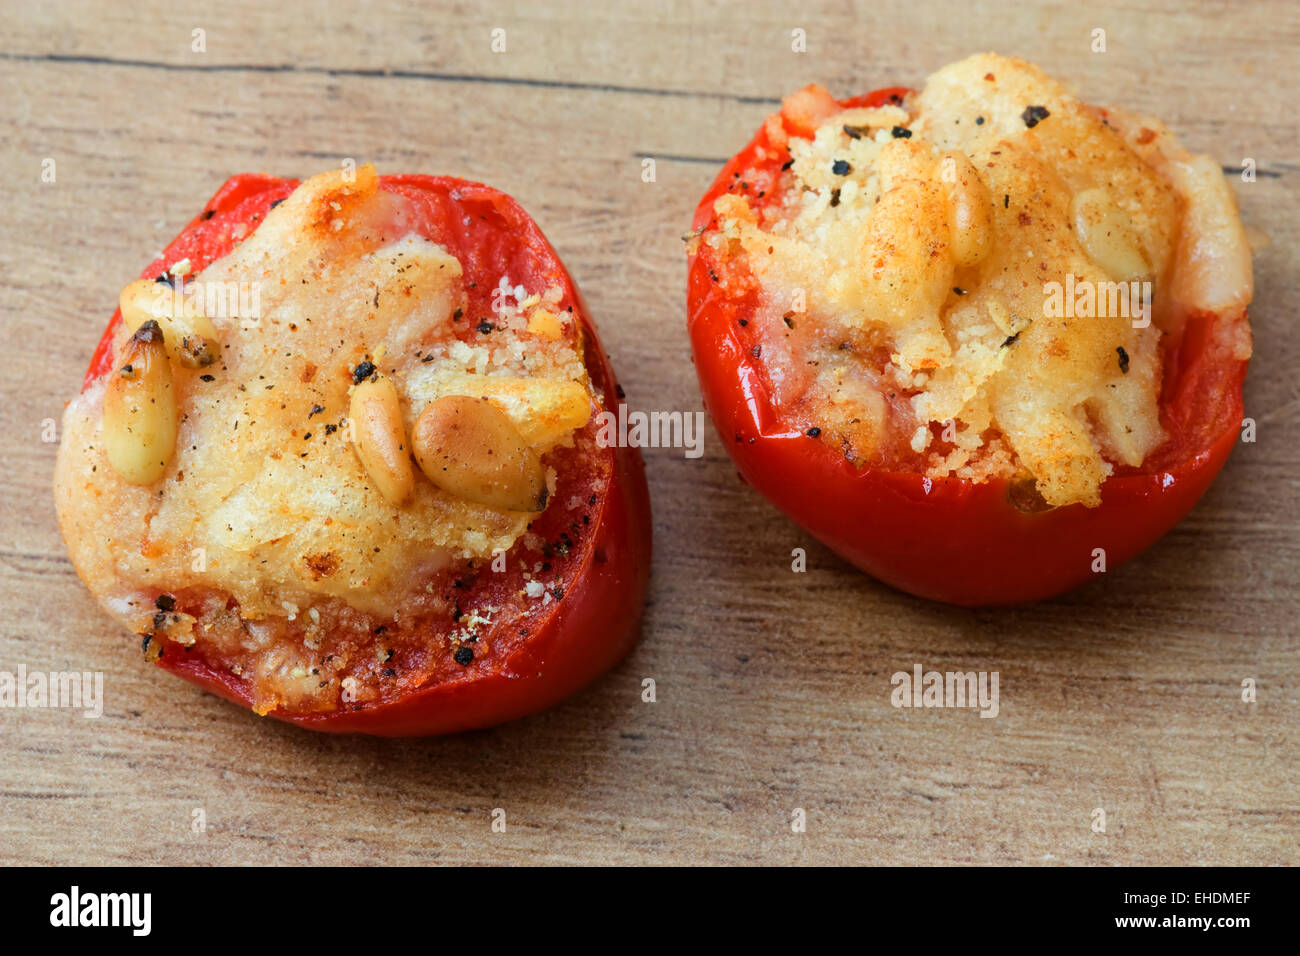 Gegrillte Tomaten - Grilled Tomatoes Stock Photo - Alamy